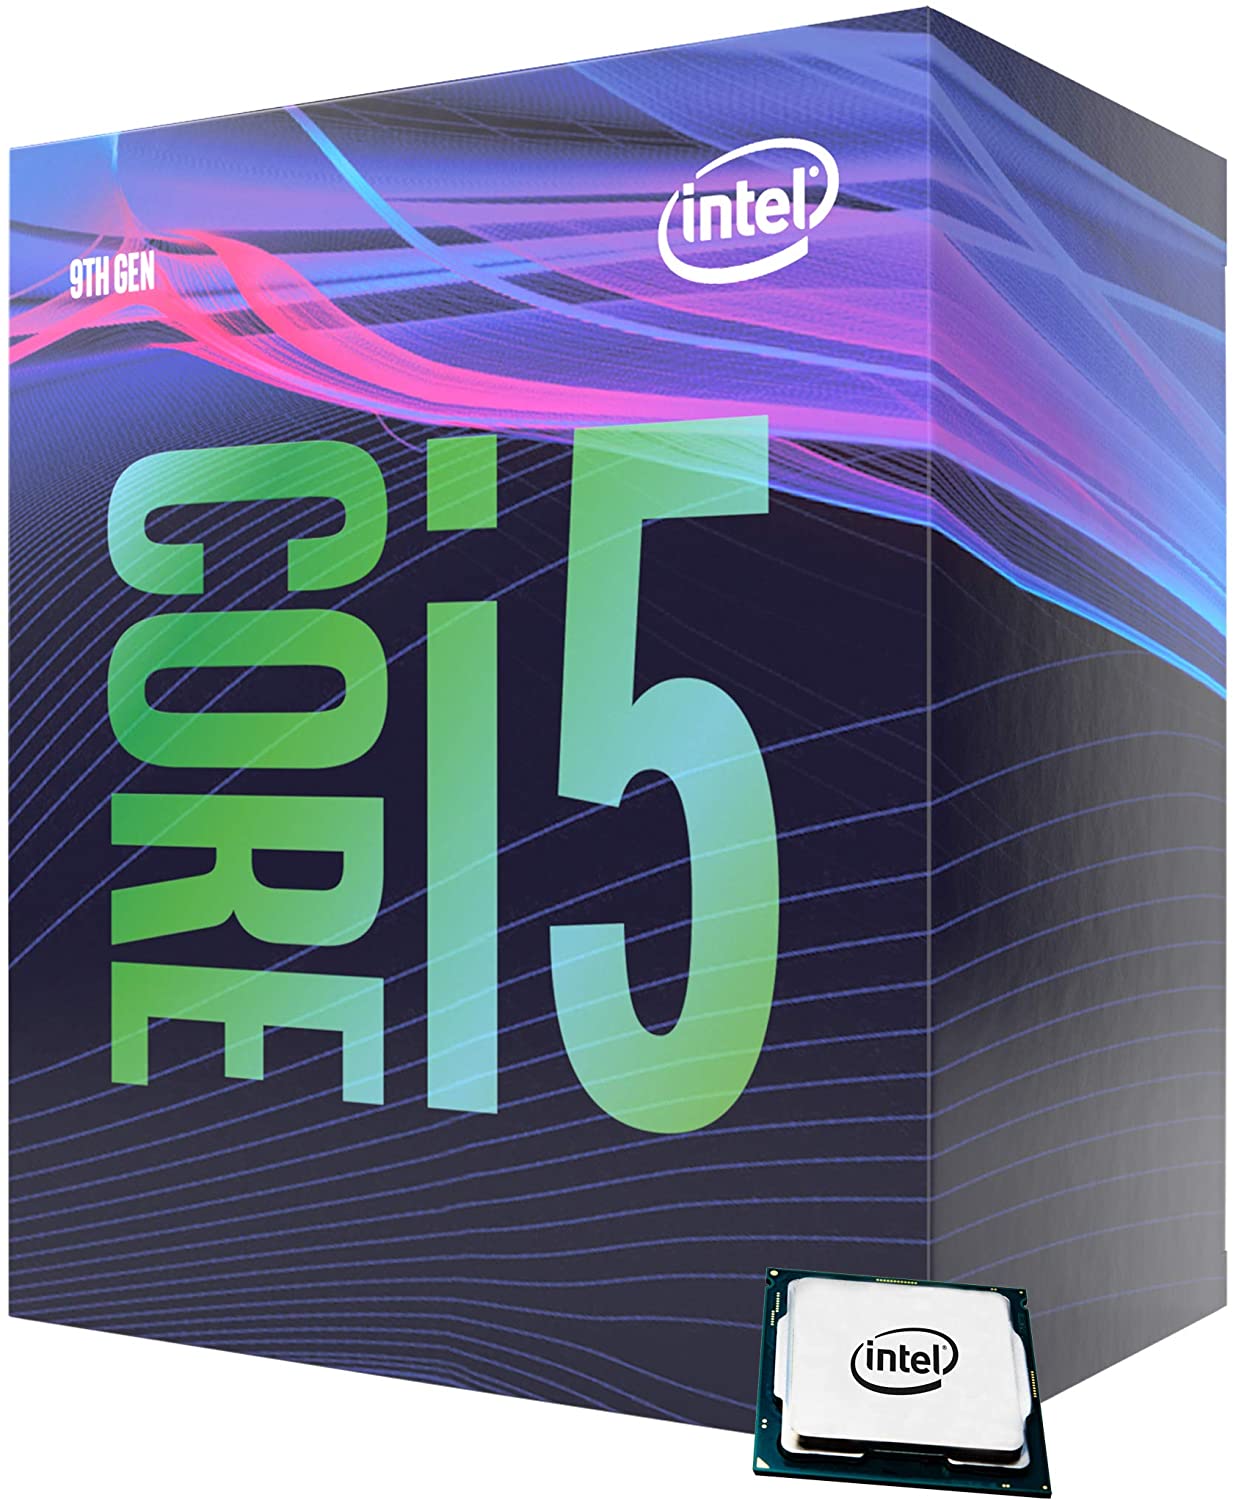 Intel Core i5-9400 Desktop Processor 6 Cores 2. 90 GHz up to 4. 10 GHz Turbo LGA1151 300 Series 65W Processors BX80684I59400